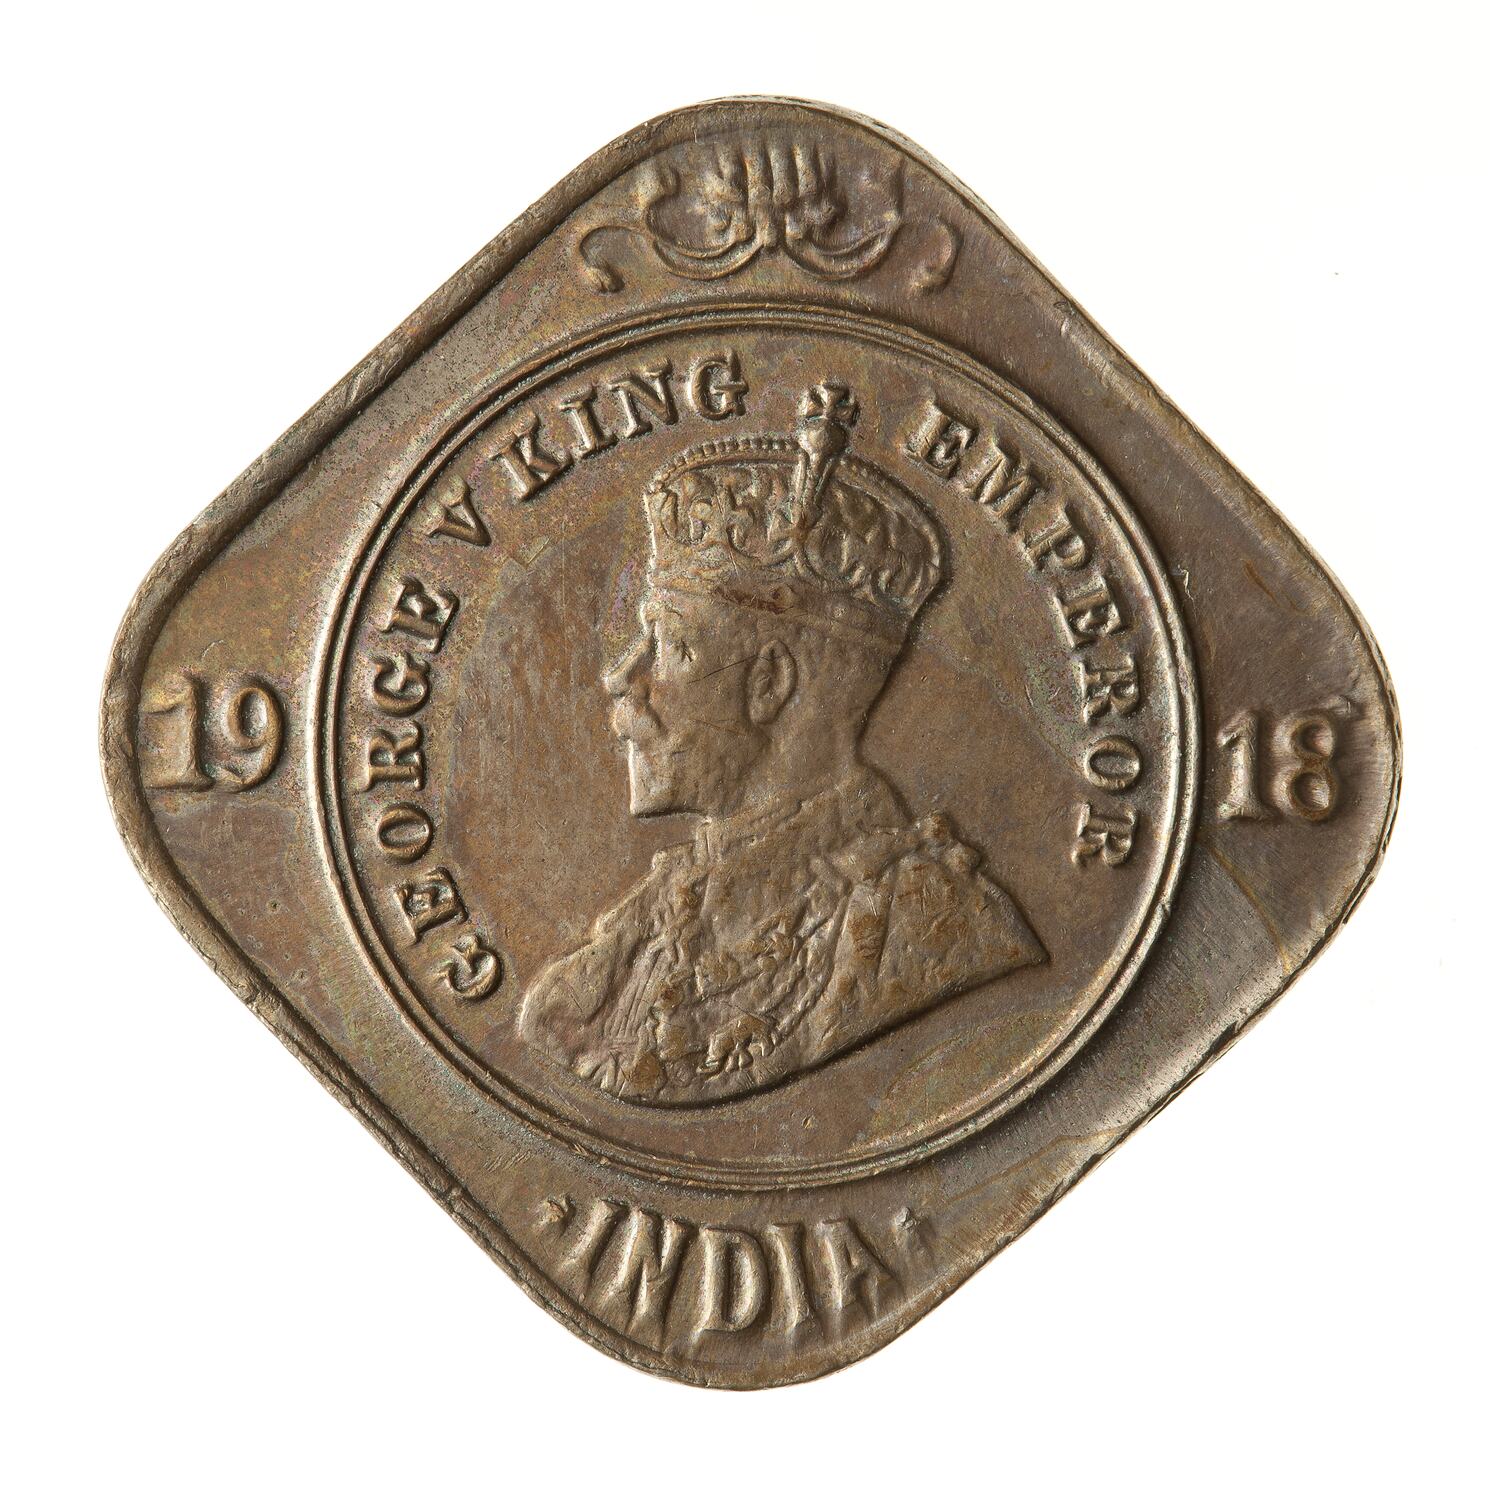 1918 2 anna coin value